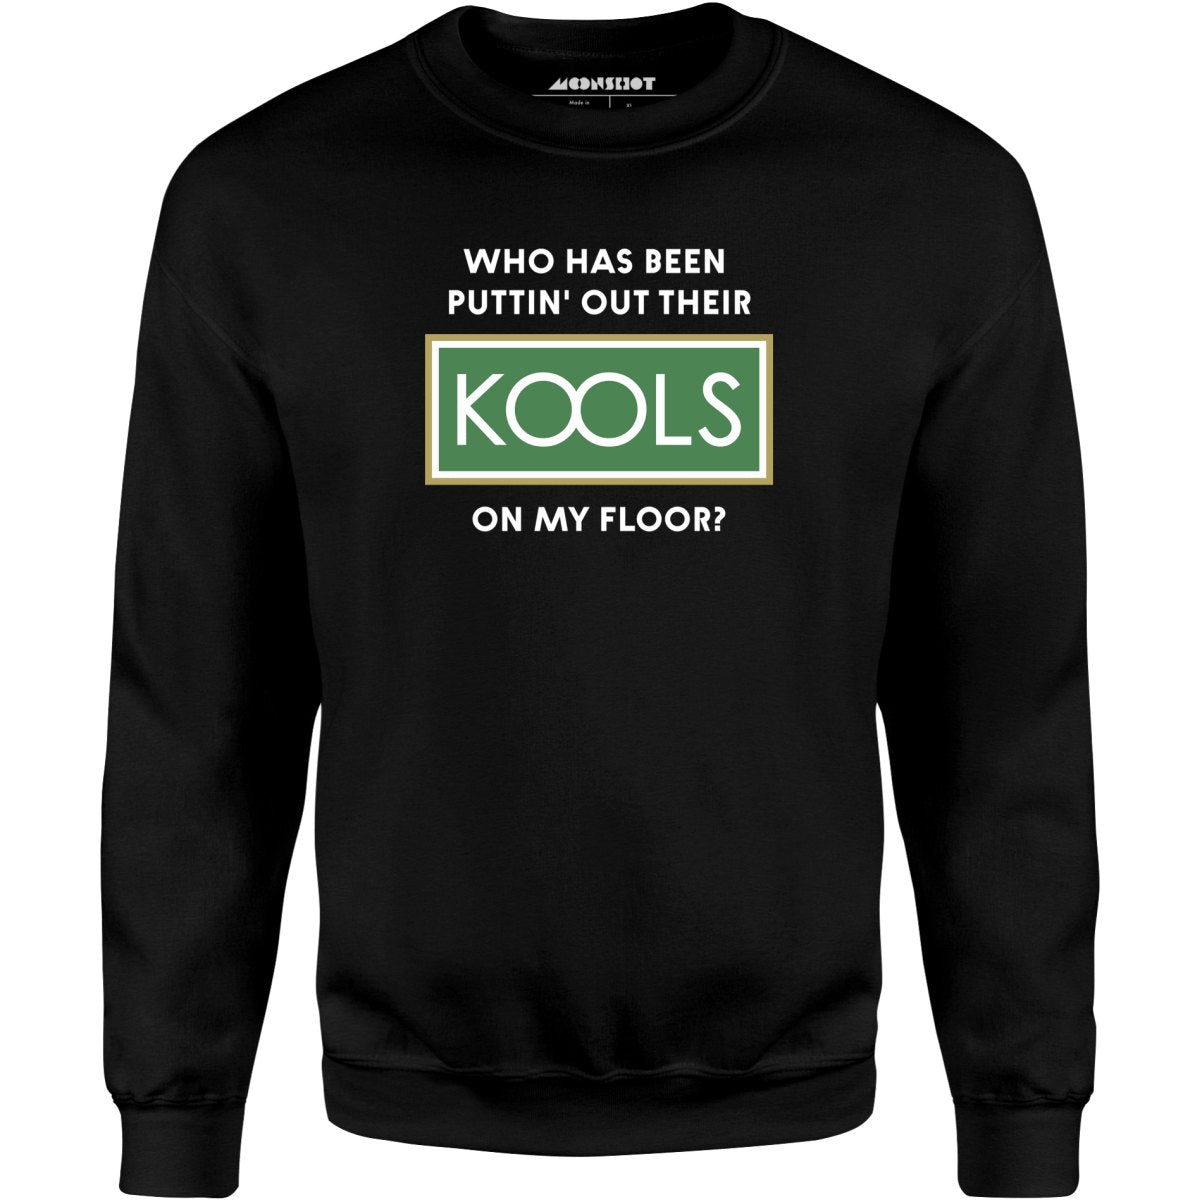 Who Has Been Puttin' Out Their Kools On My Floor? - Unisex Sweatshirt